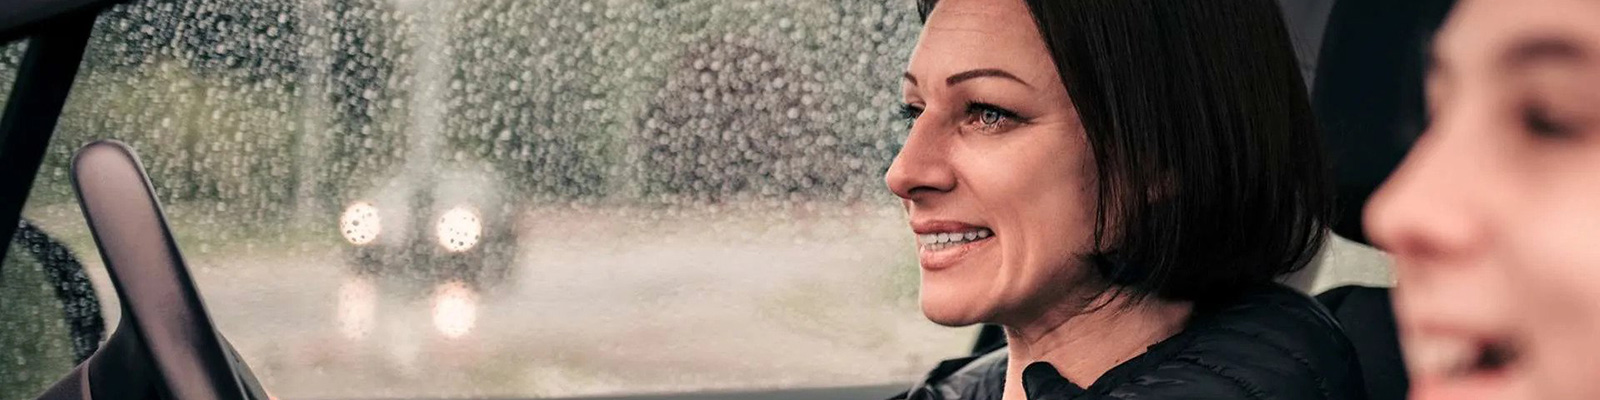 mother daughter driving in rain